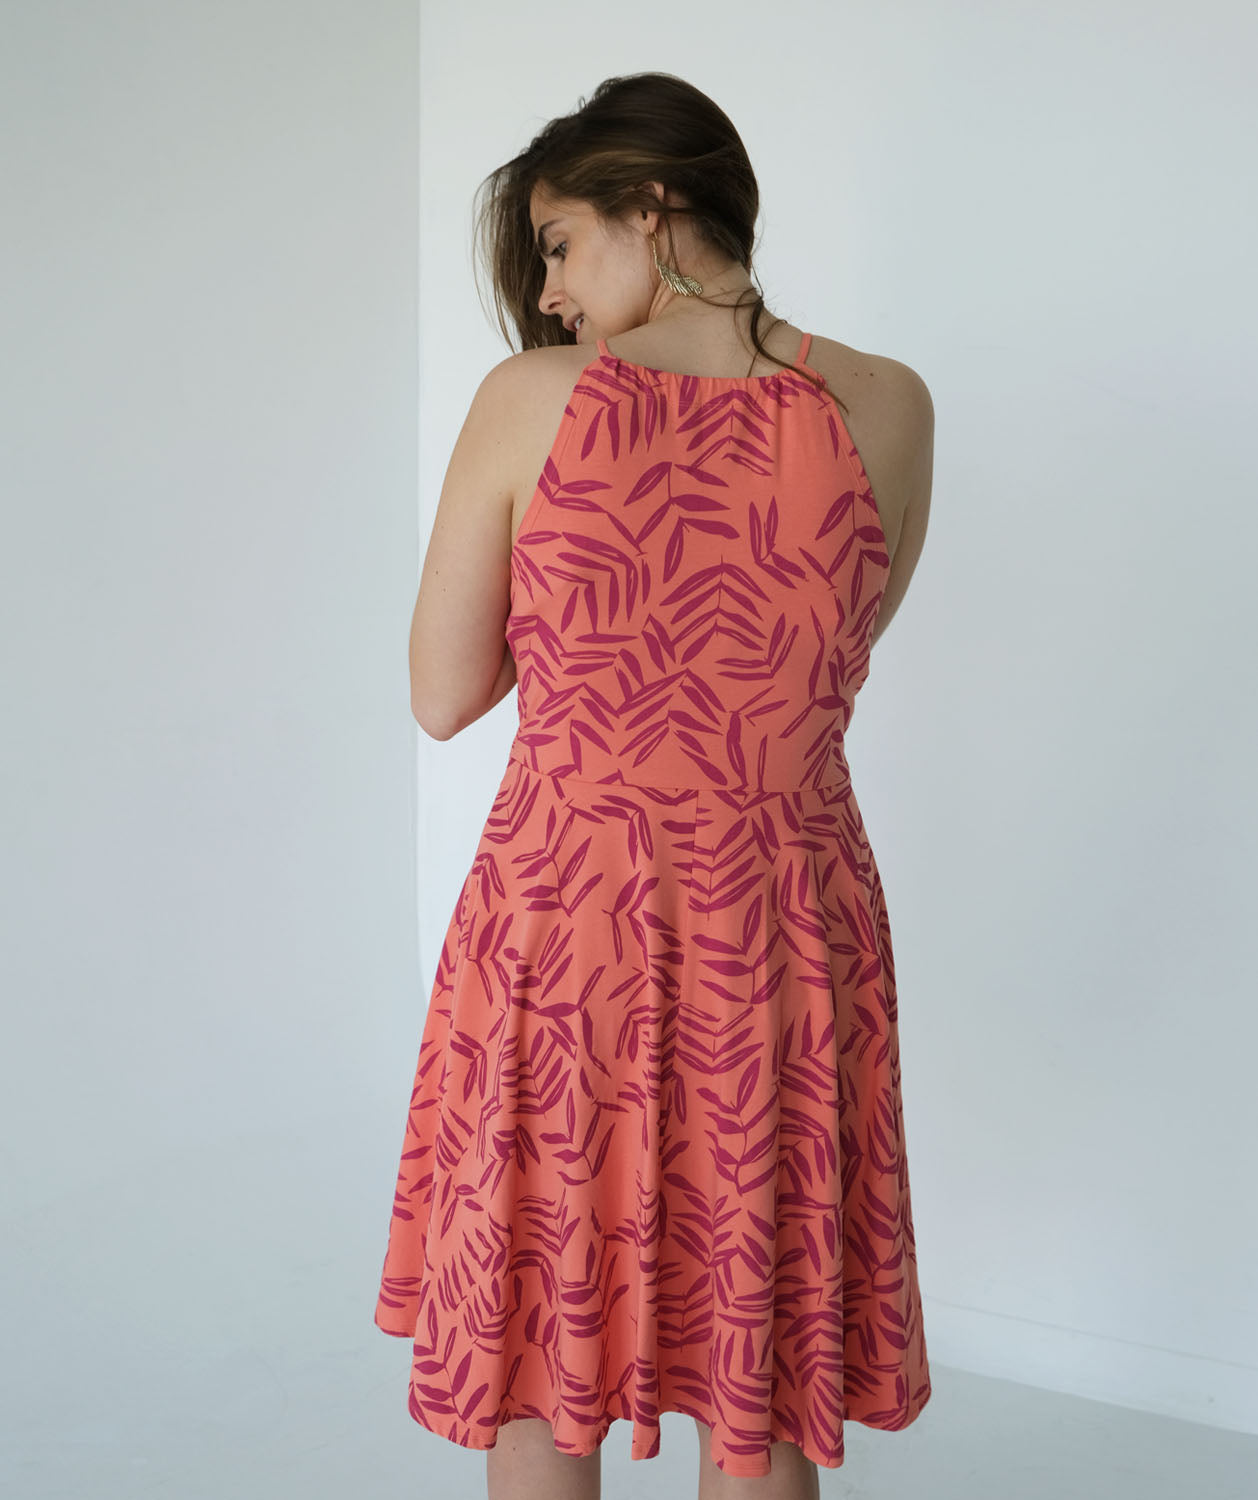 ISLA dress in Tangerine/Azalea